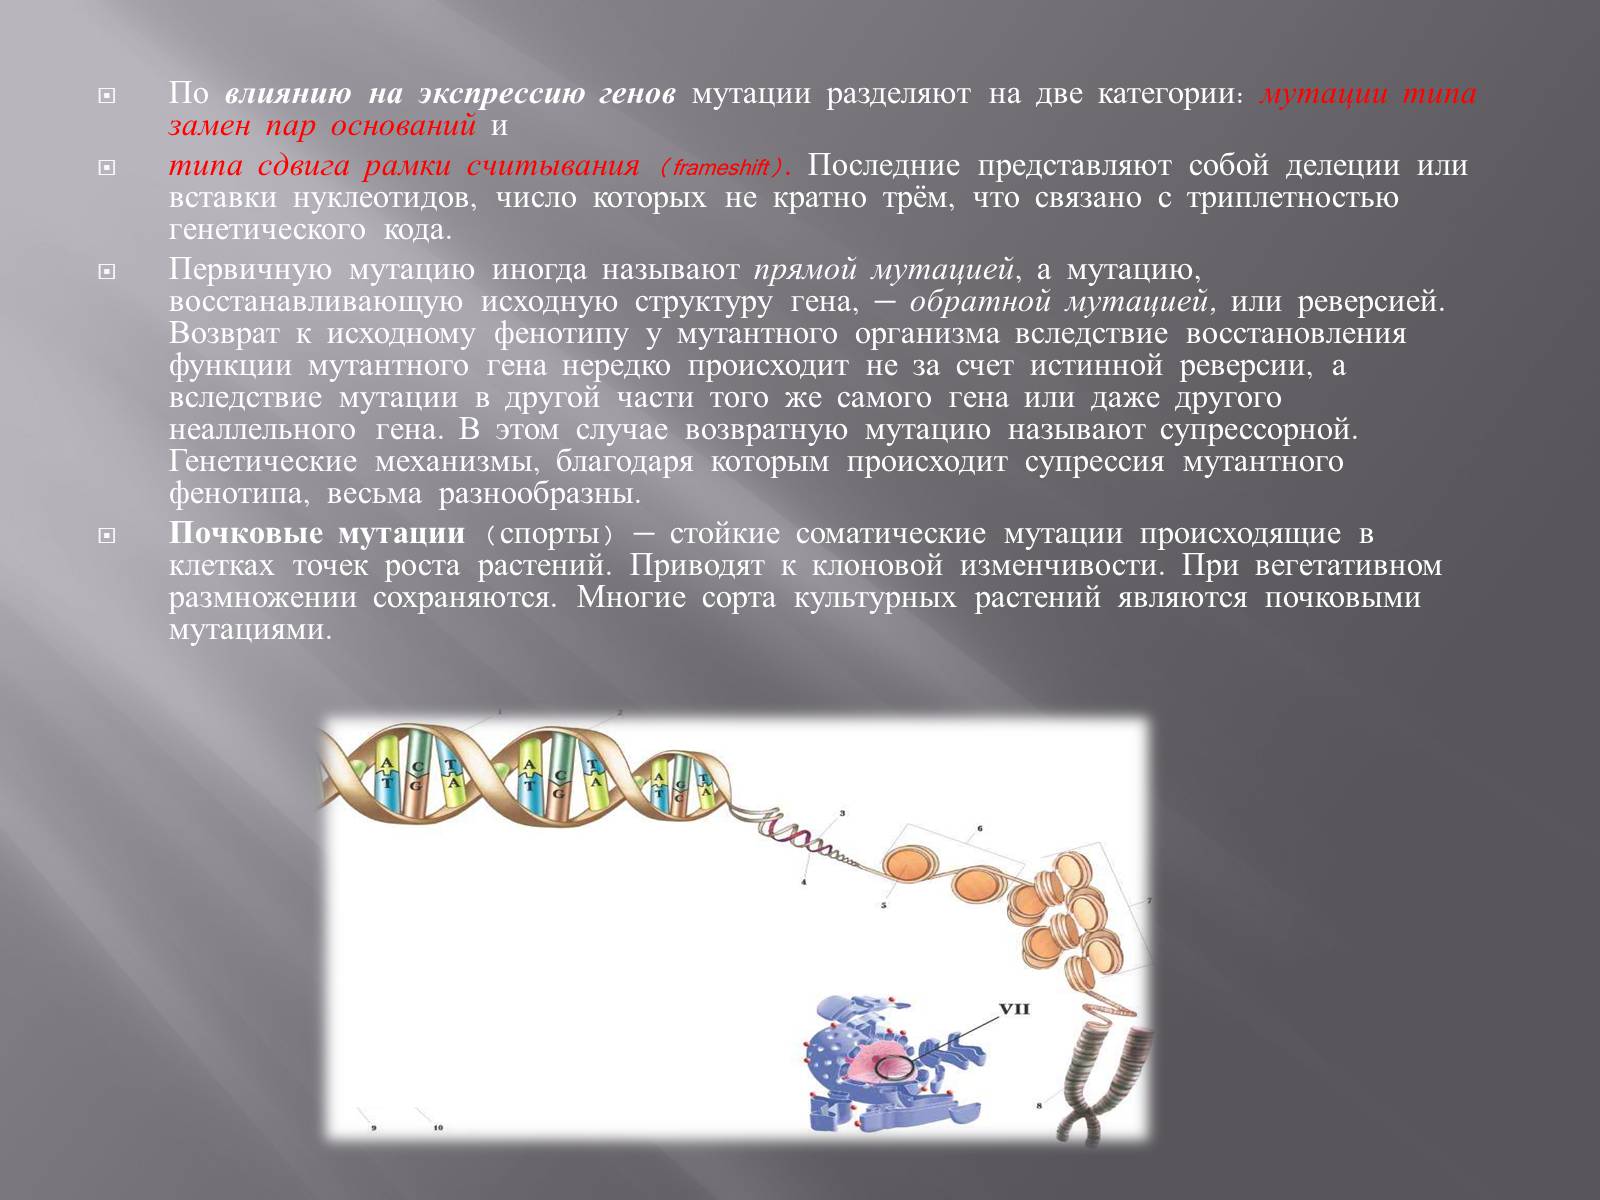 Презентація на тему «Мутации, мутогены, виды мутаций, причины мутаций, значение мутаций» - Слайд #16